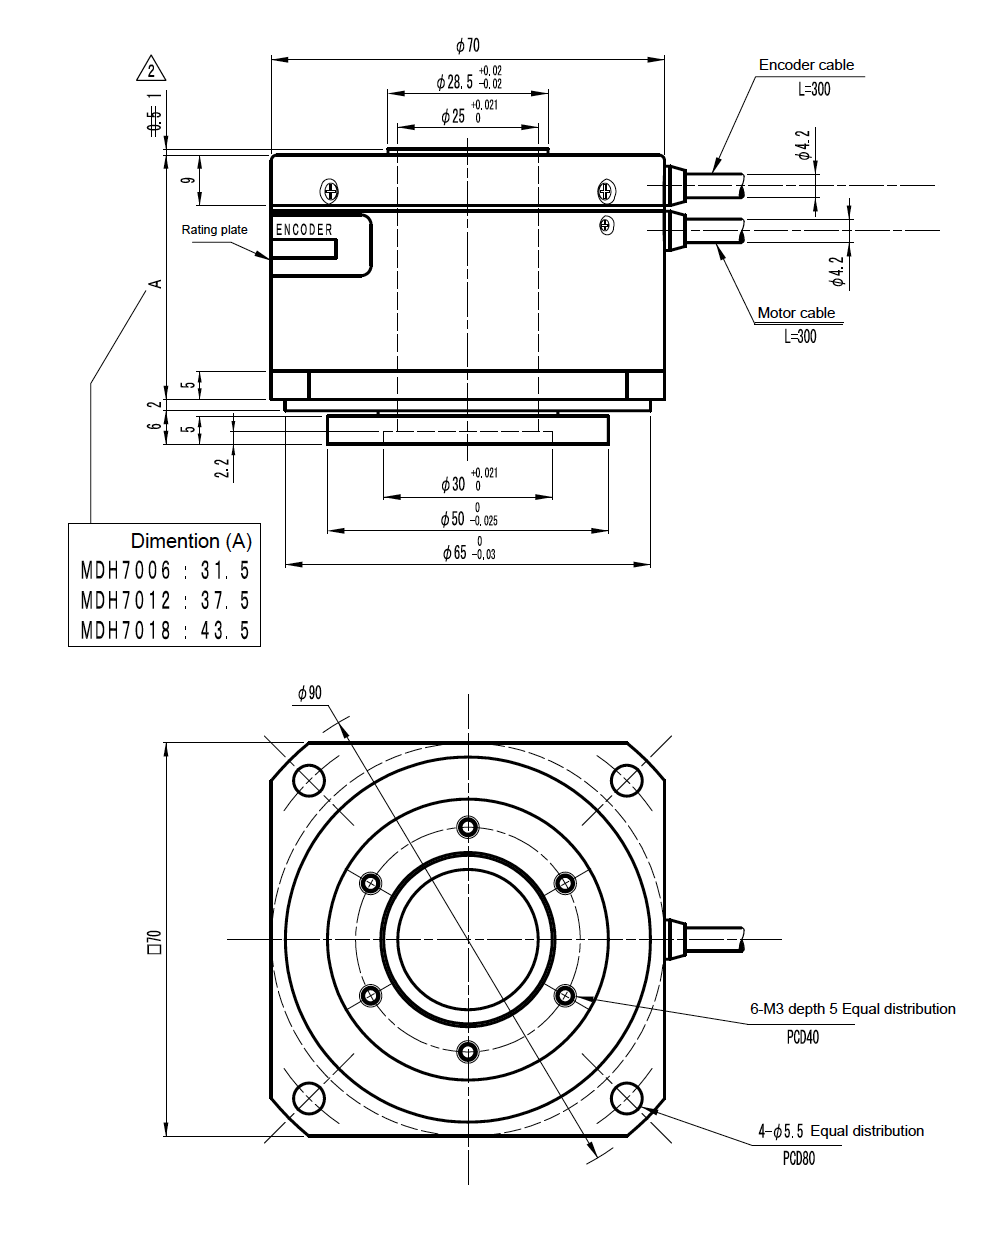 MDH-7006 system drawing